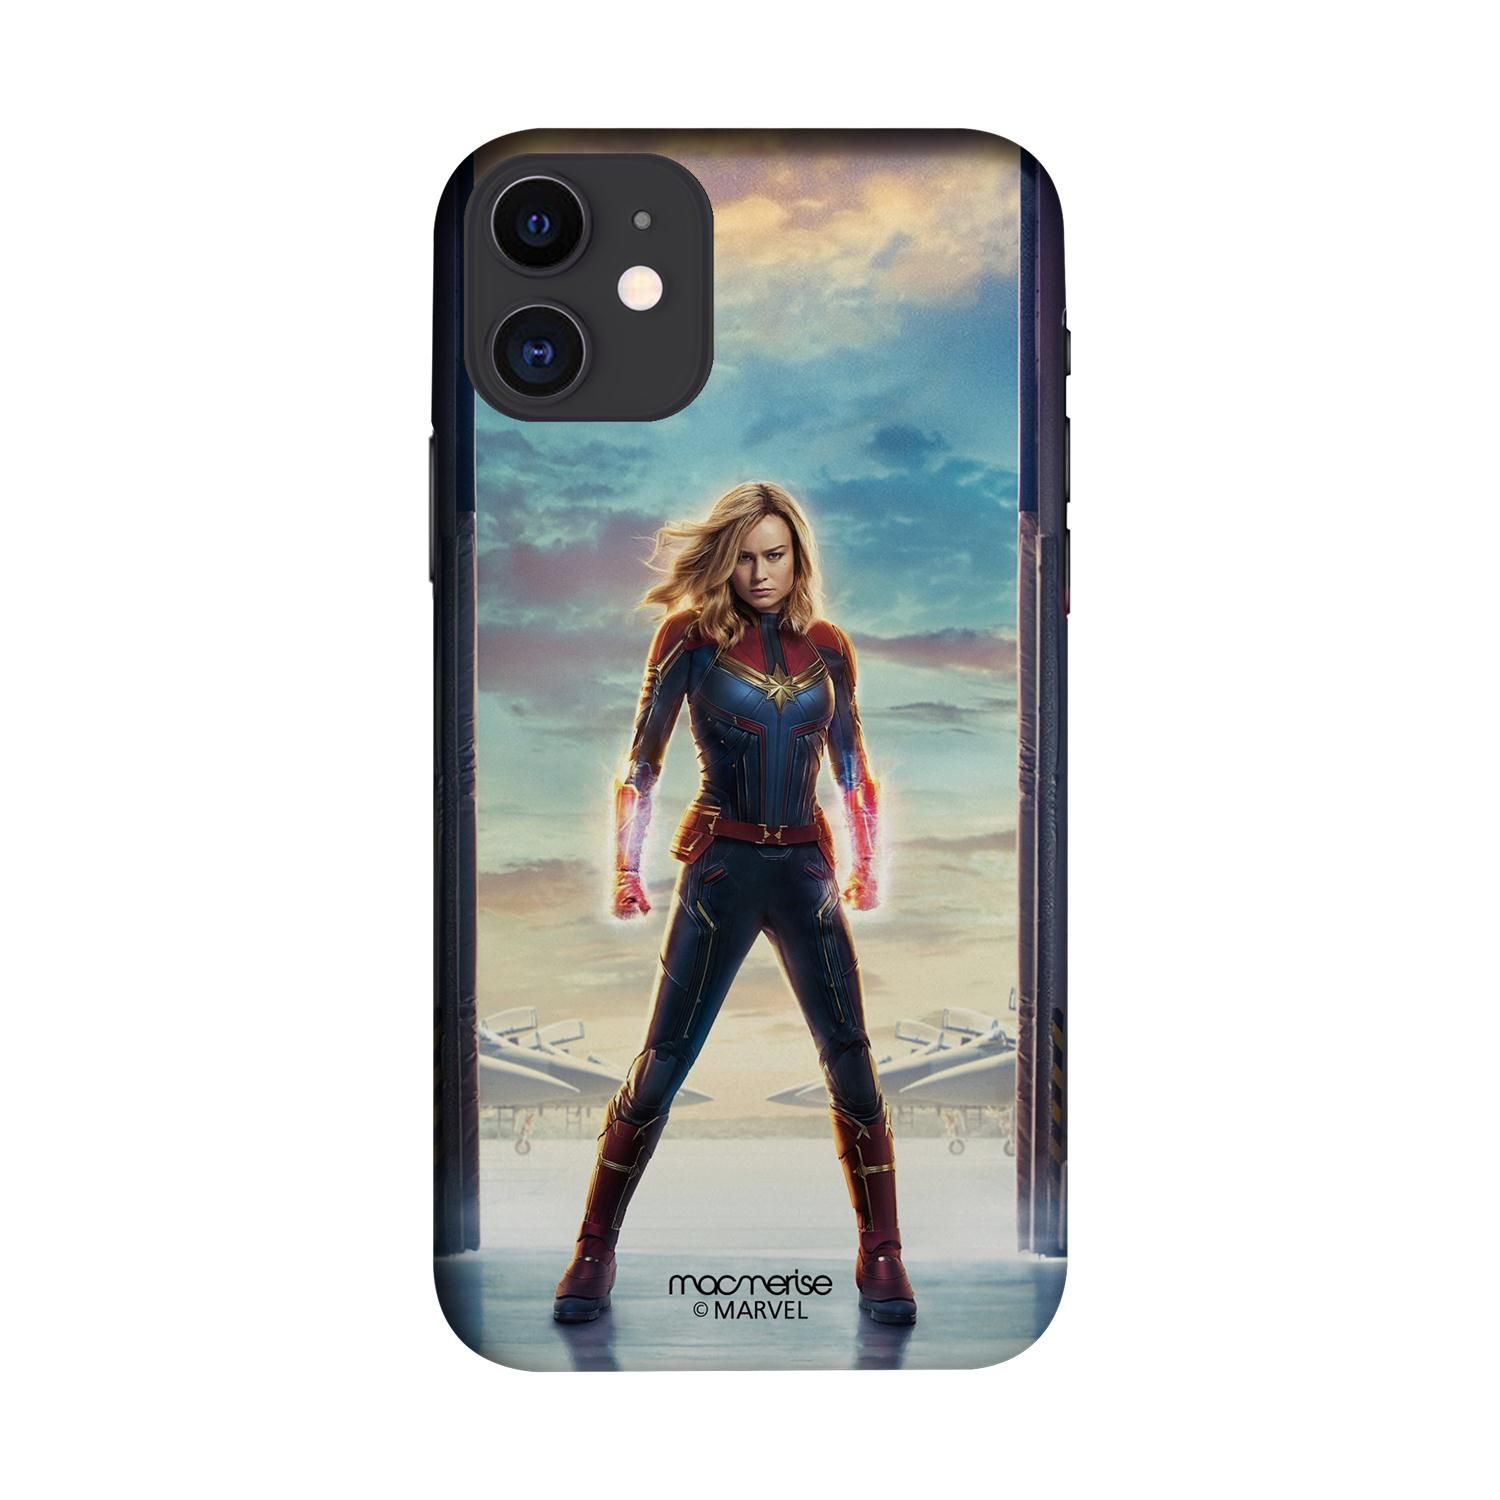 Buy Captain Marvel Poster - Sleek Phone Case for iPhone 11 Online